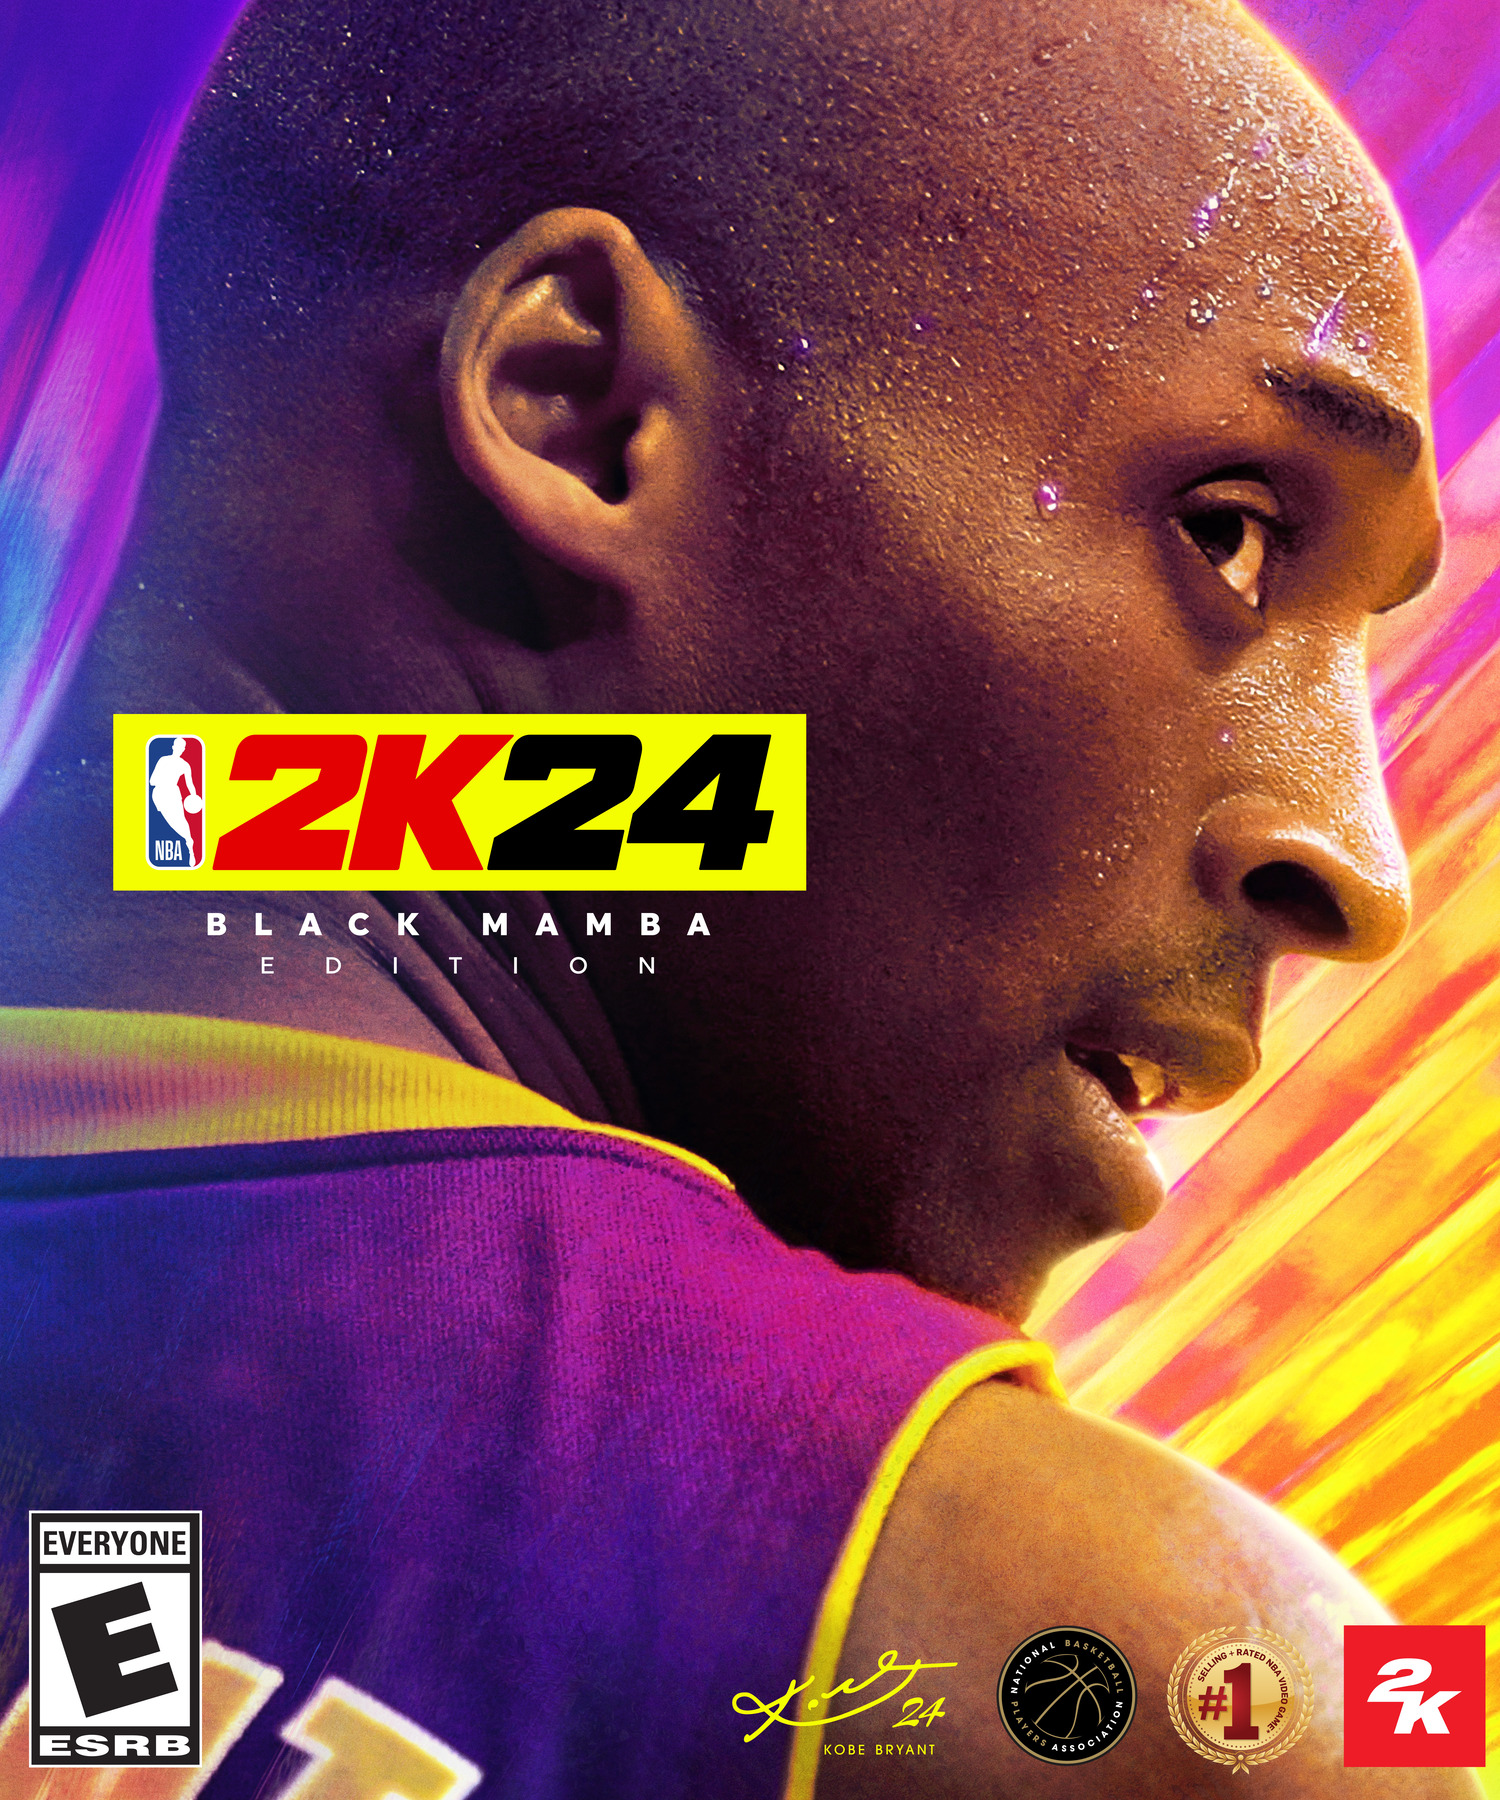 NBA 2K24 tendrá a Kobe Bryant en su portada 2